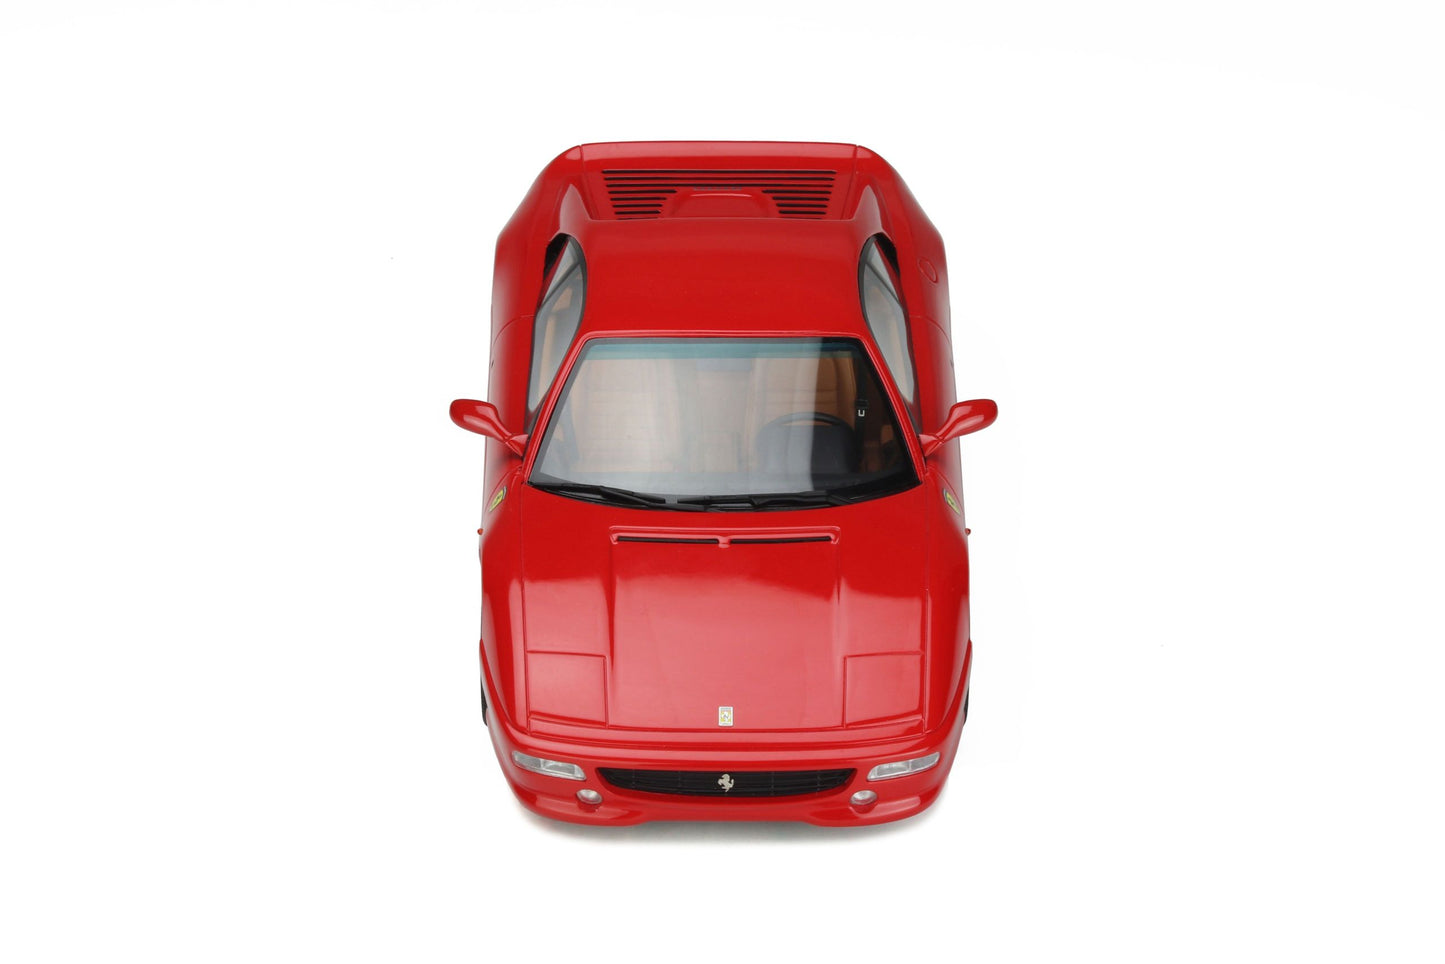 GT Spirit - Ferrari 355 GTB Berlinetta (Rosso Corsa Red) 1:18 Scale Model Car